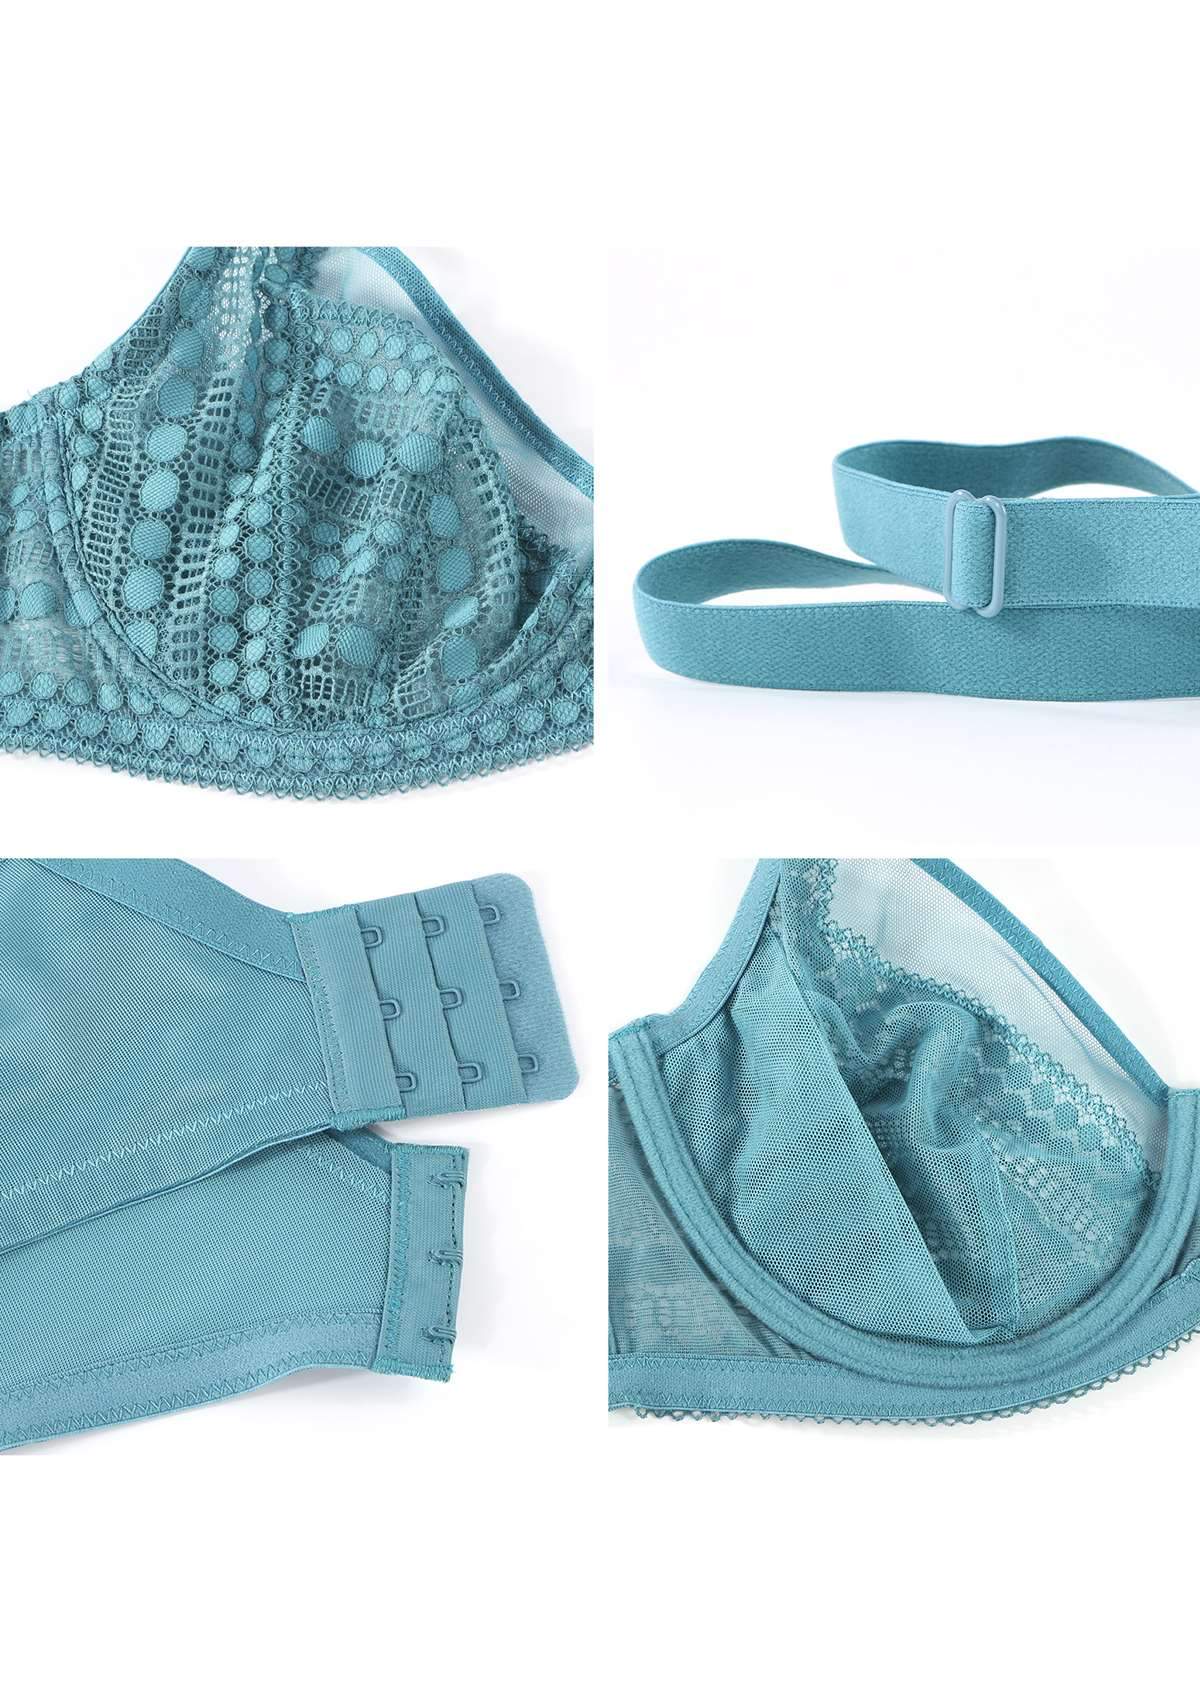 HSIA Heroine Matching Bra And Underwear Set: Bra For Big Boobs - Brittany Blue / 38 / DDD/F